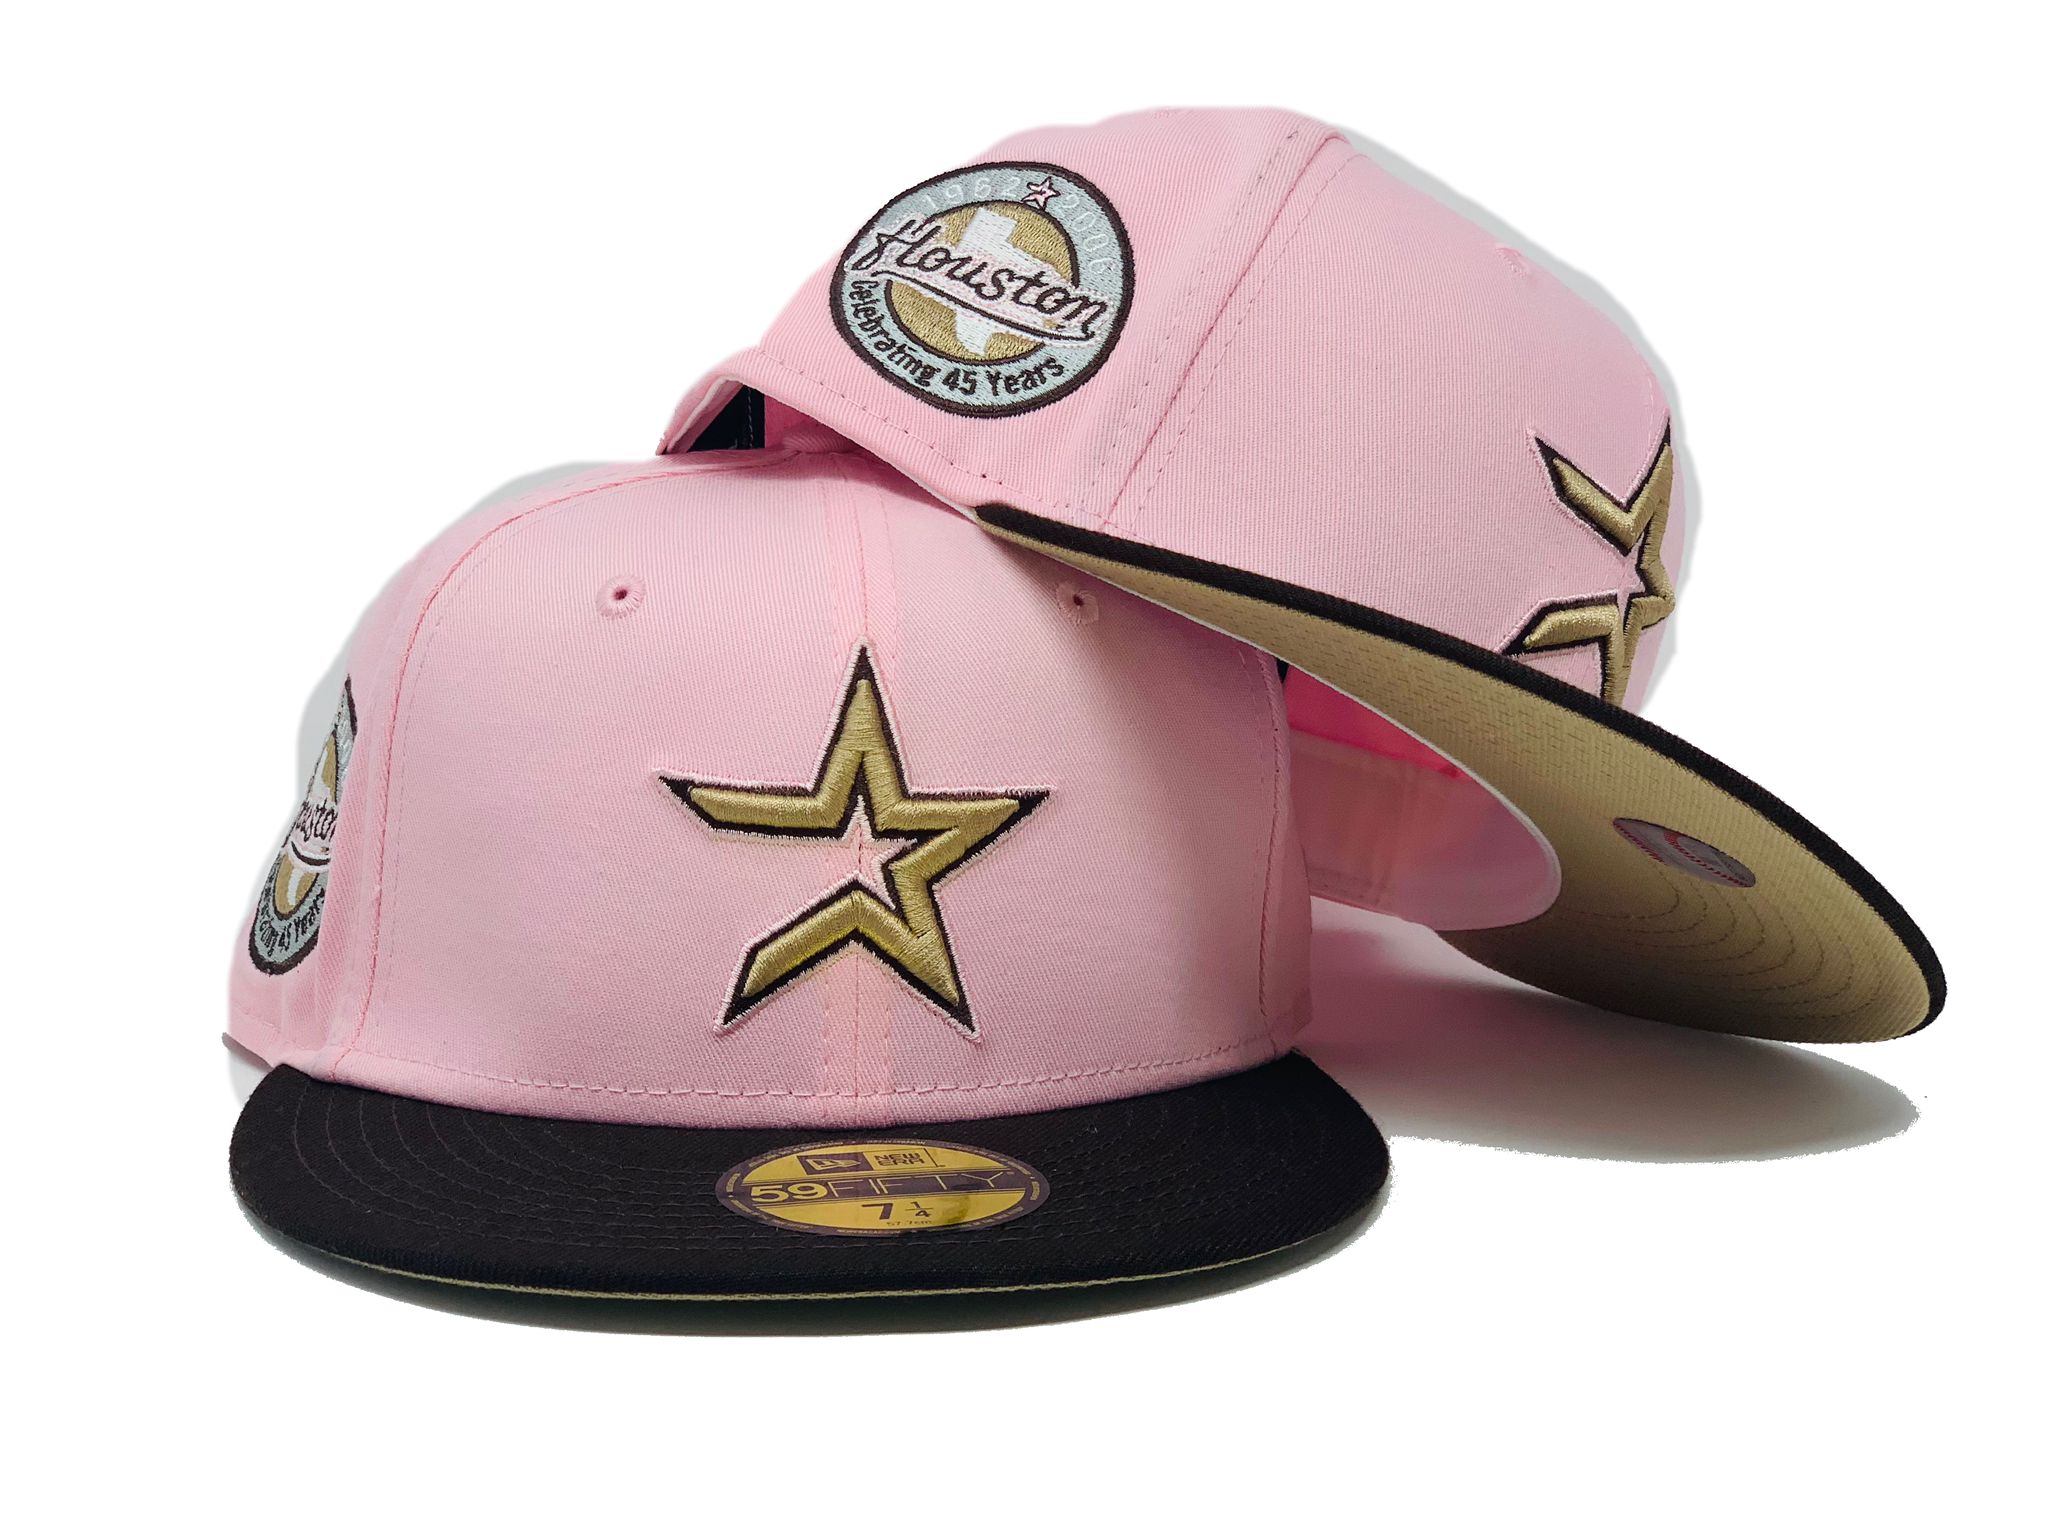 Buy Houston Astros New Era Fitted Hat Size 7 at Ubuy India